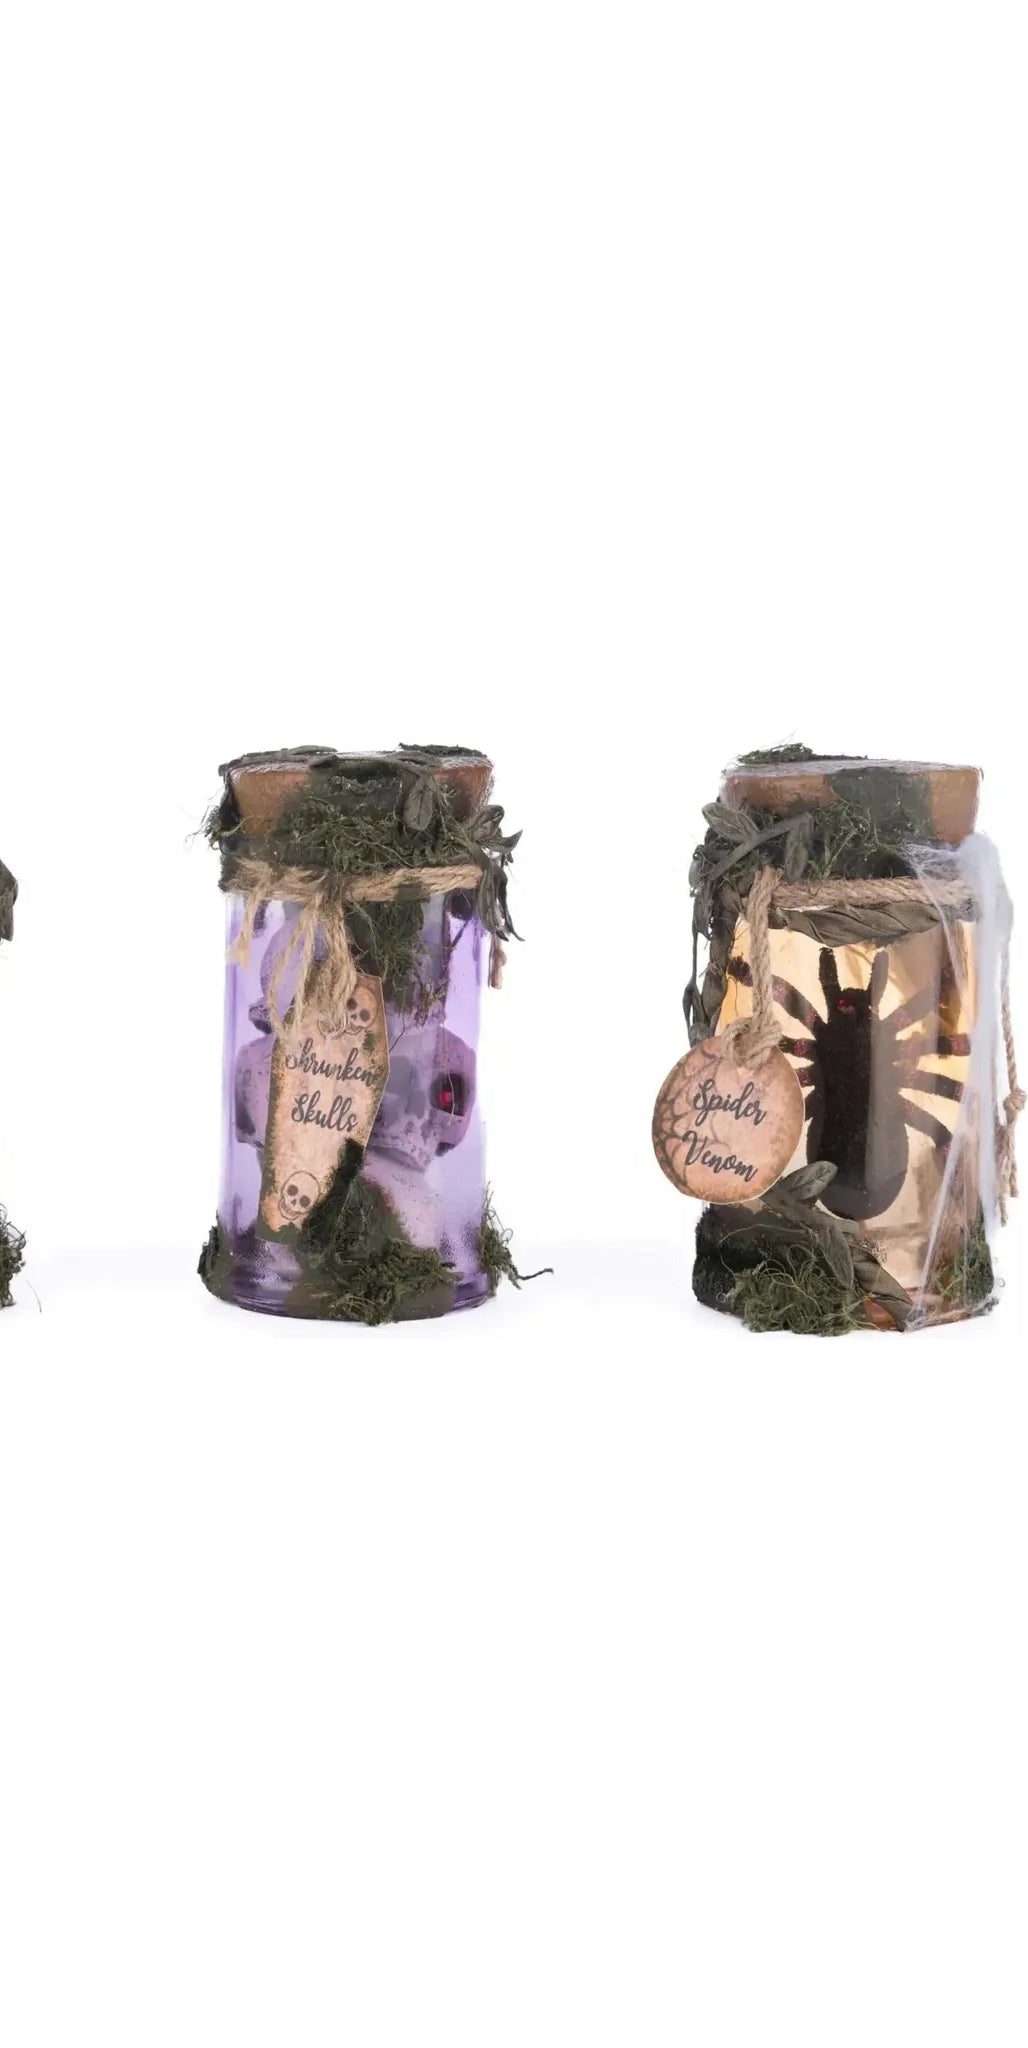 Broomstick Acres Potion Jars Assortment of 3 - Michelle's aDOORable Creations - Halloween Decor